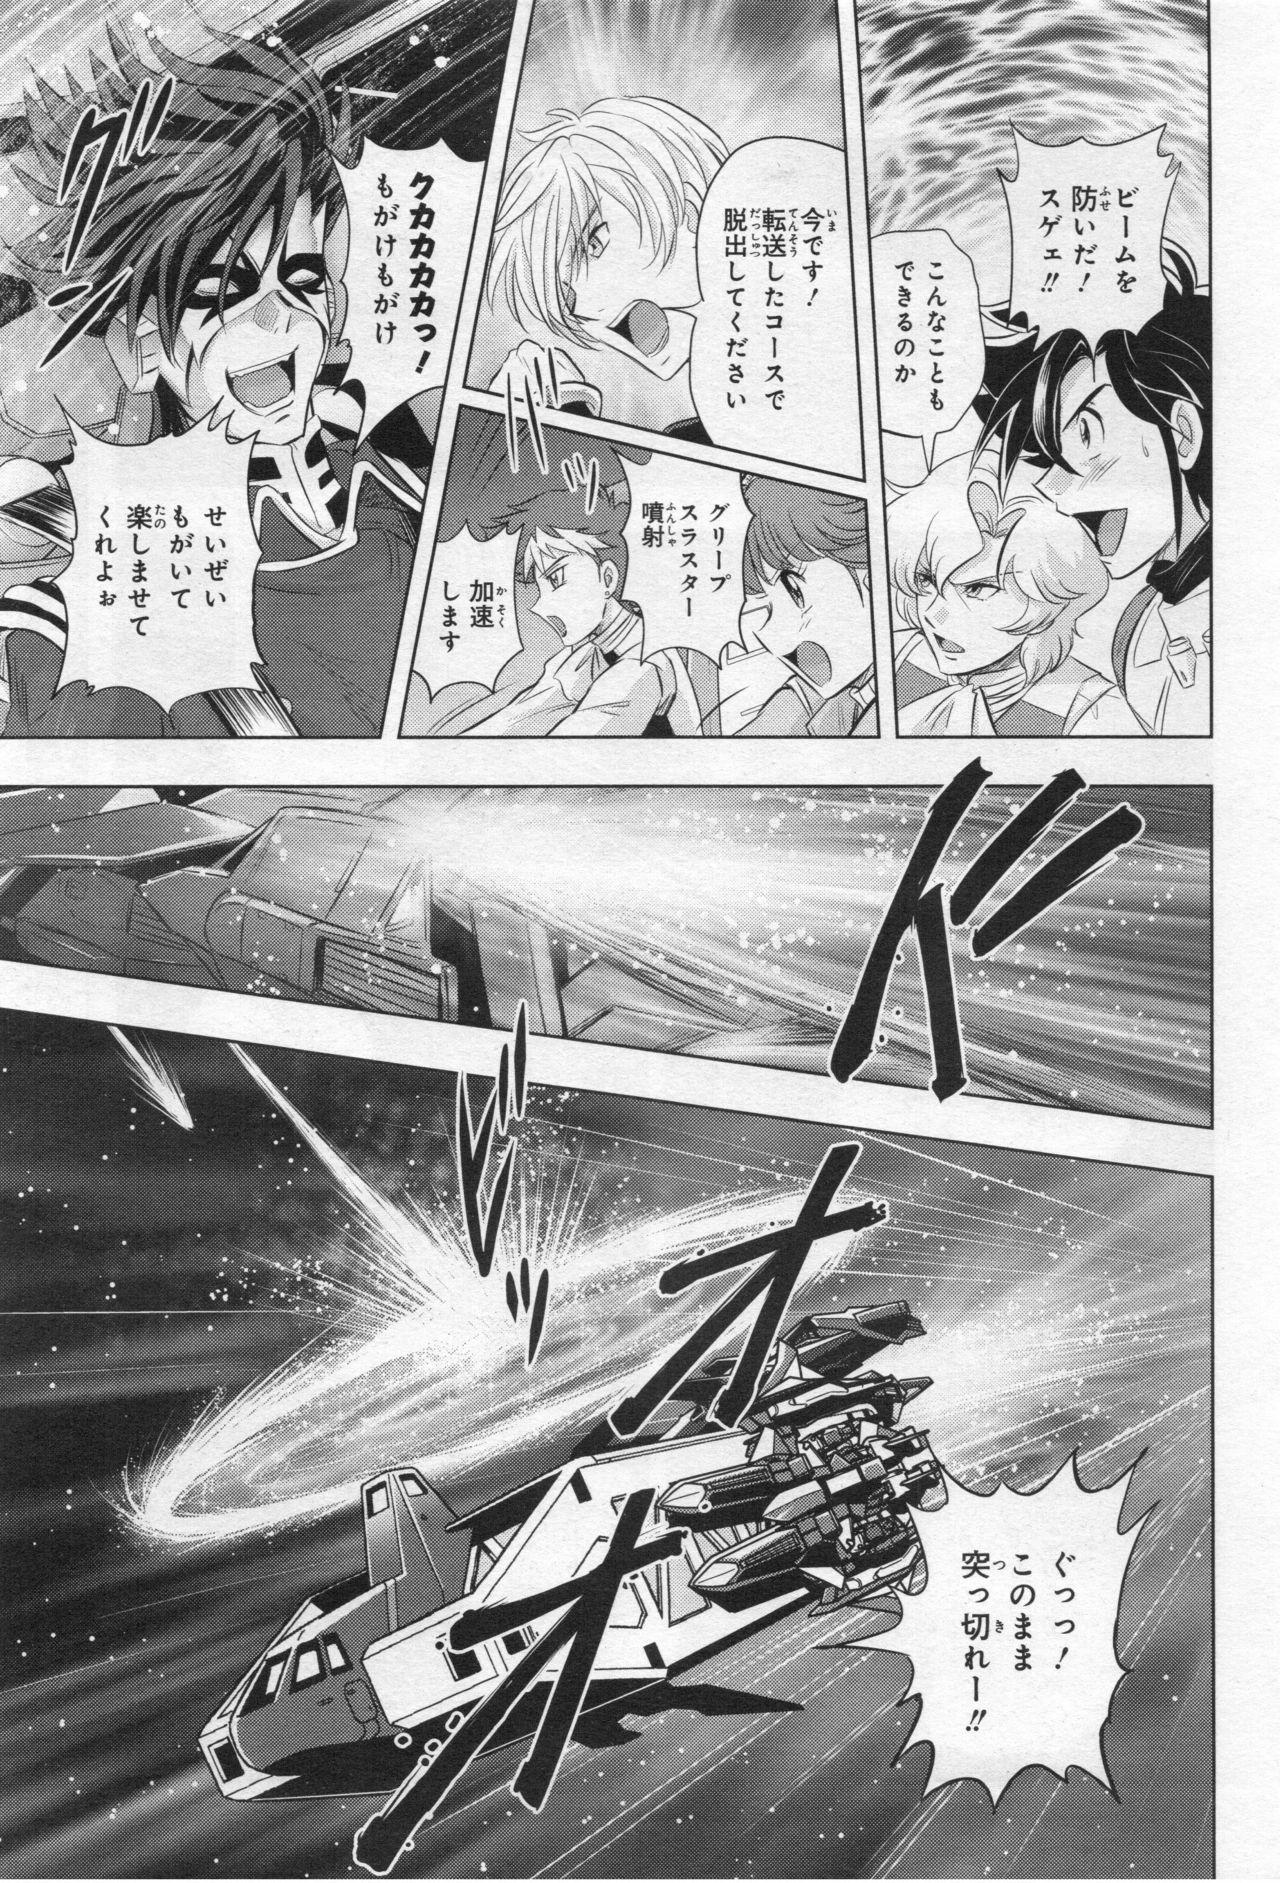 Gundam Ace - October 2019 129